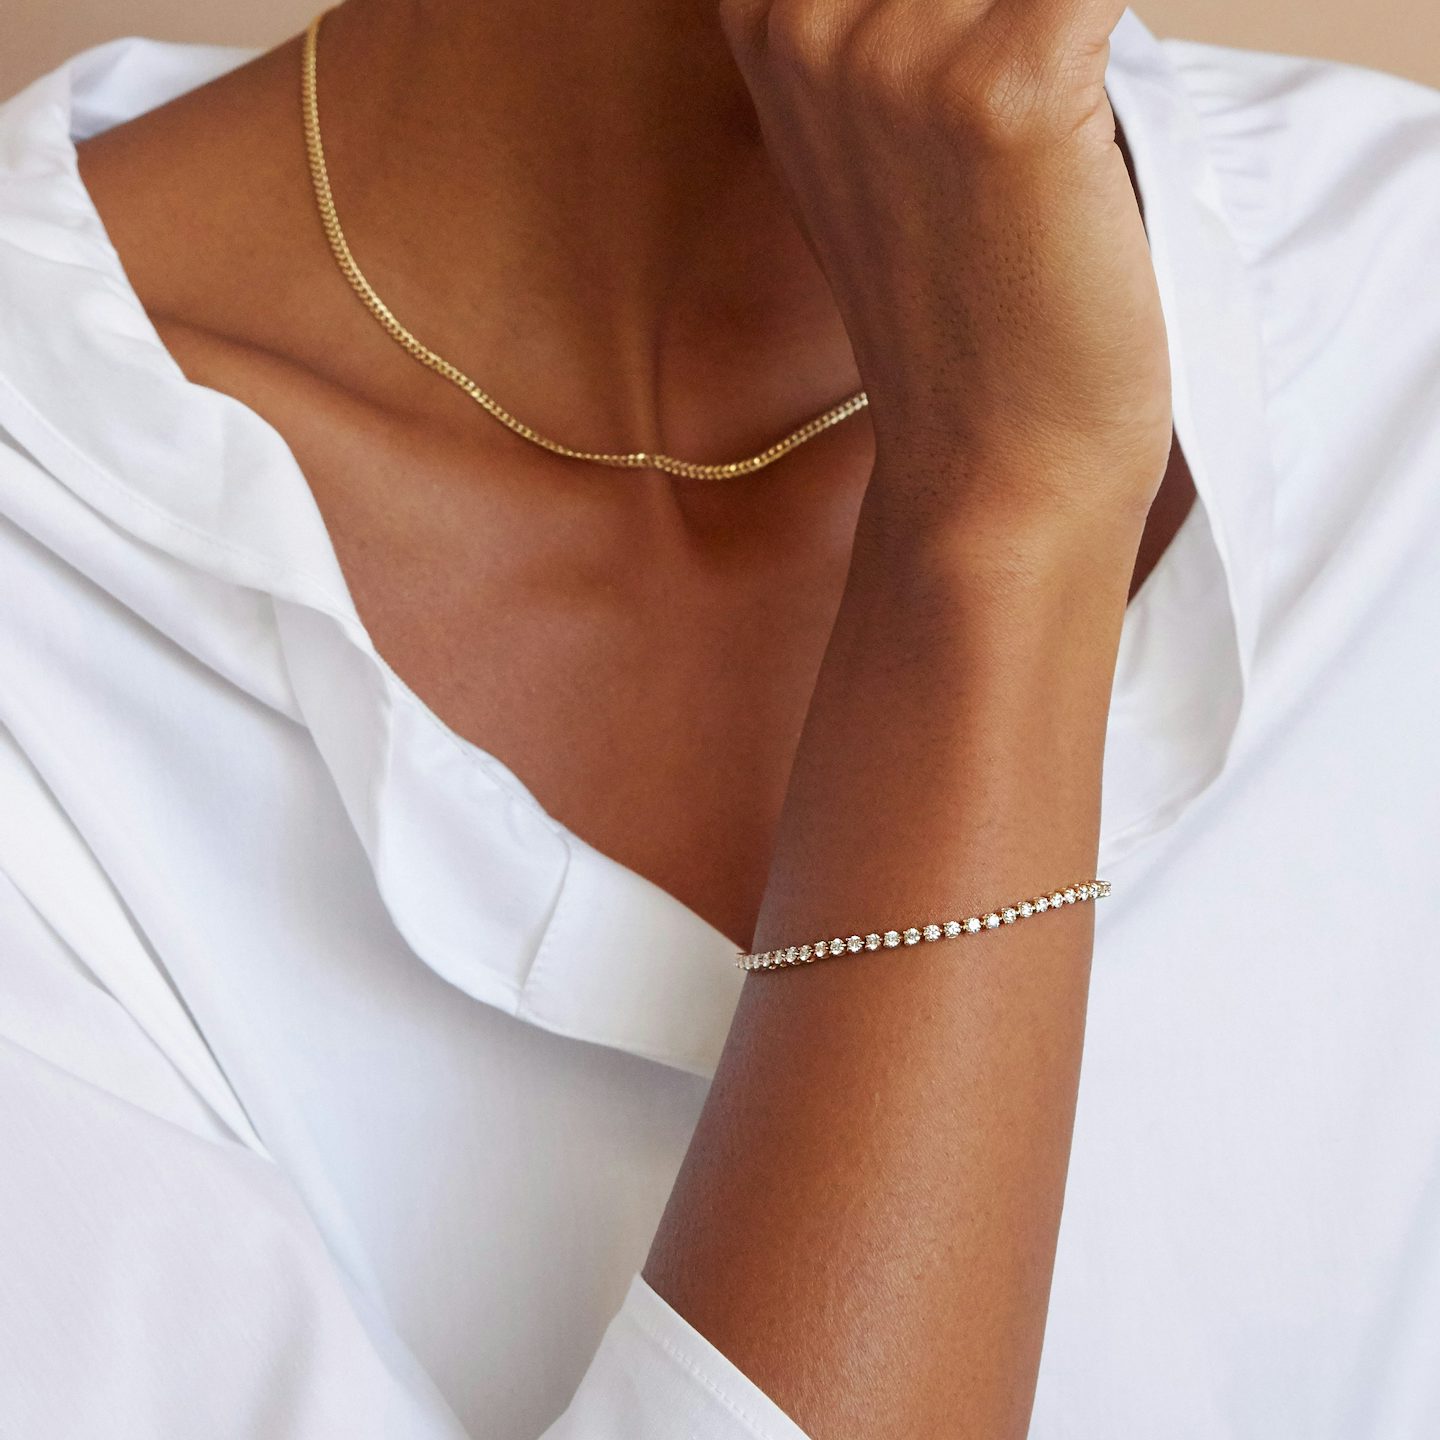 Tennis Bracelet | Round Brilliant | 14k | 18k Yellow Gold | Chain length: 6.5 | Diamond size: Petite